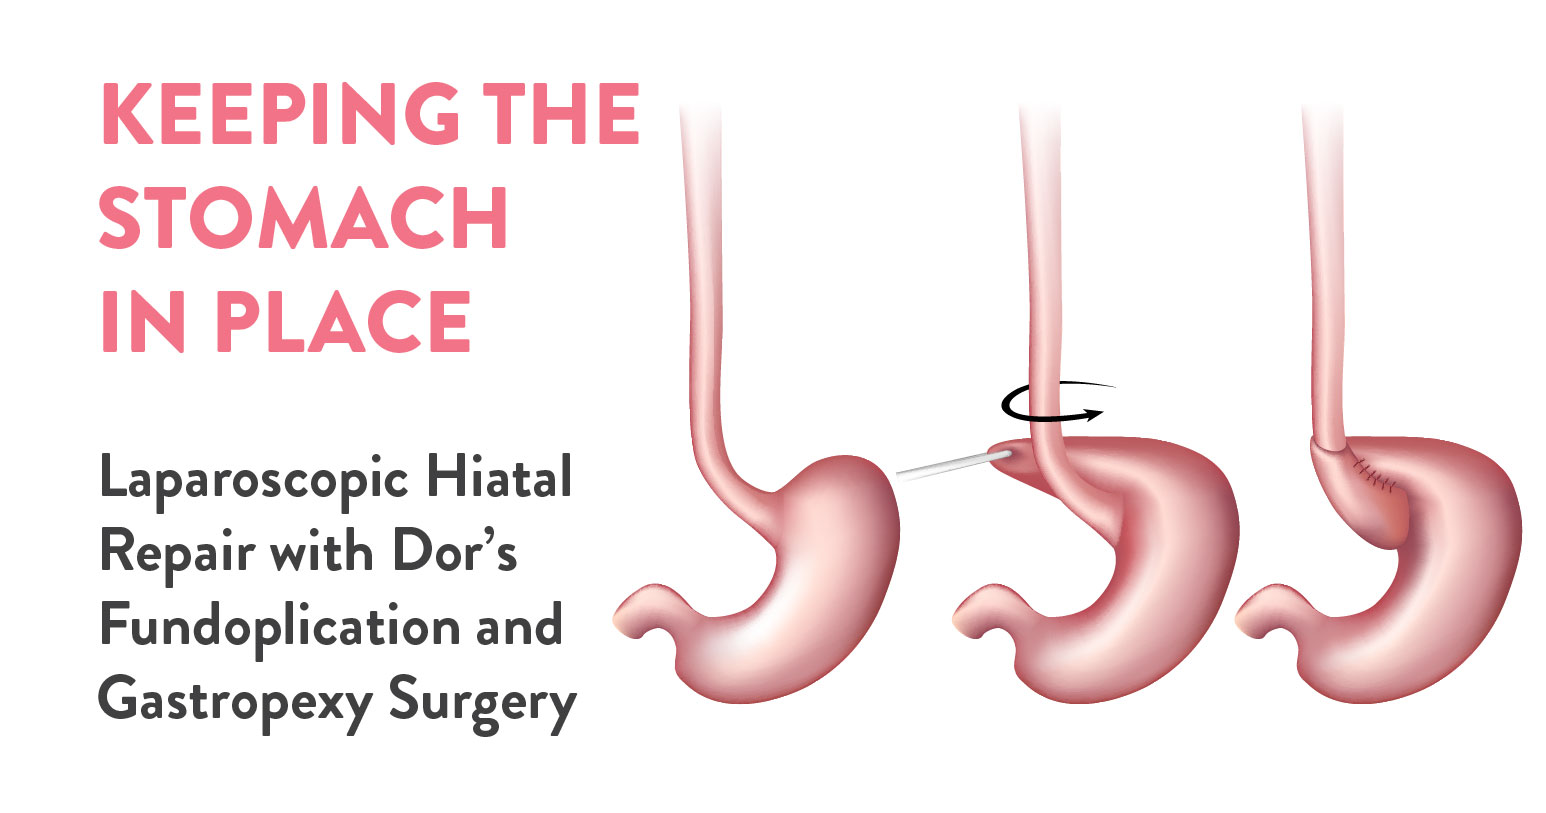 Laparoscopic Hiatal Repair with Dor’s Fundoplication and Gastropexy Surgery